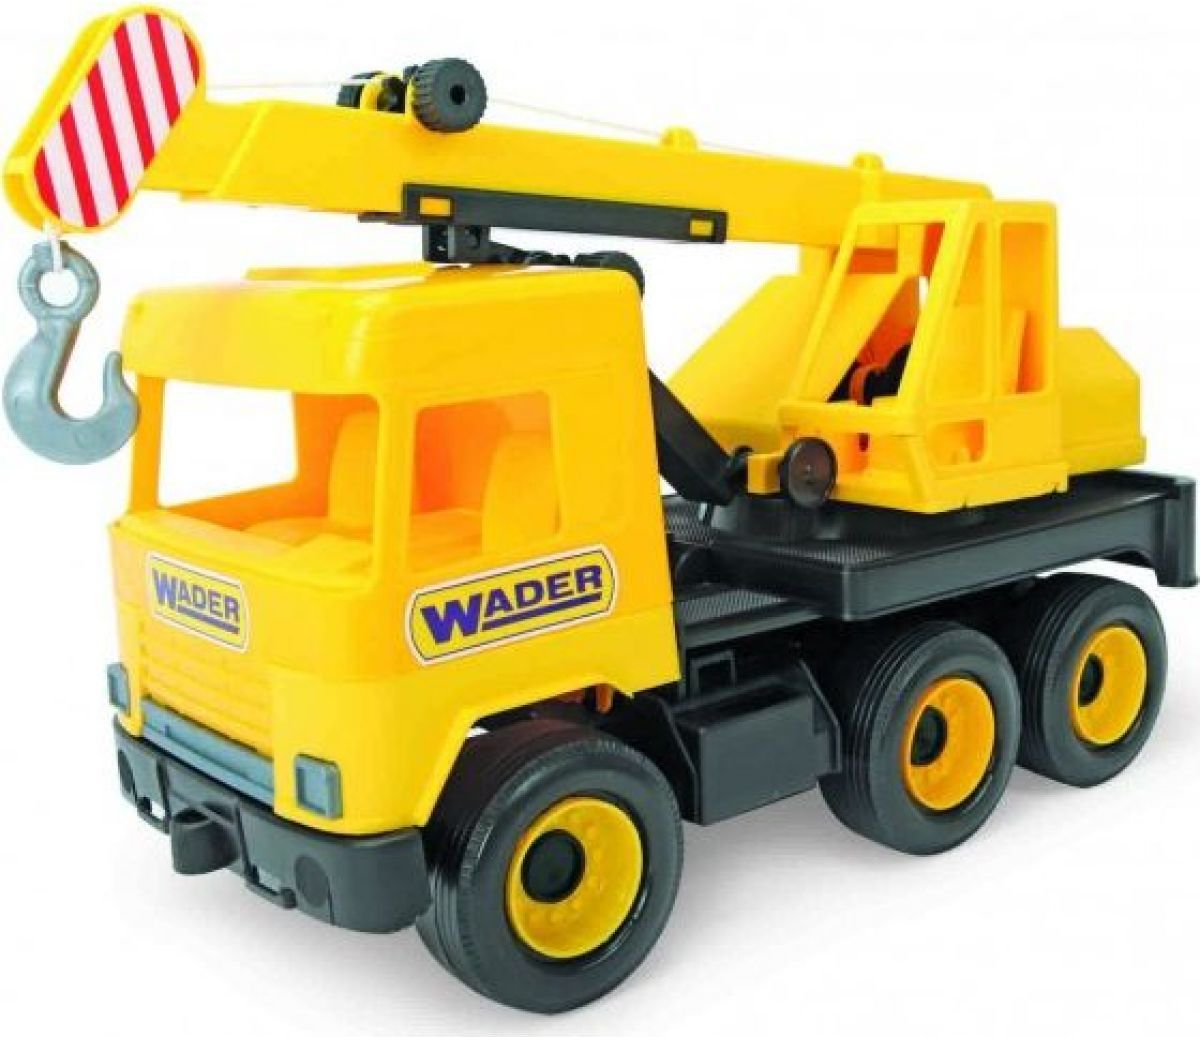 Wader Auto middle Truck jeřáb plast 40cm žlutý v krabici - obrázek 1